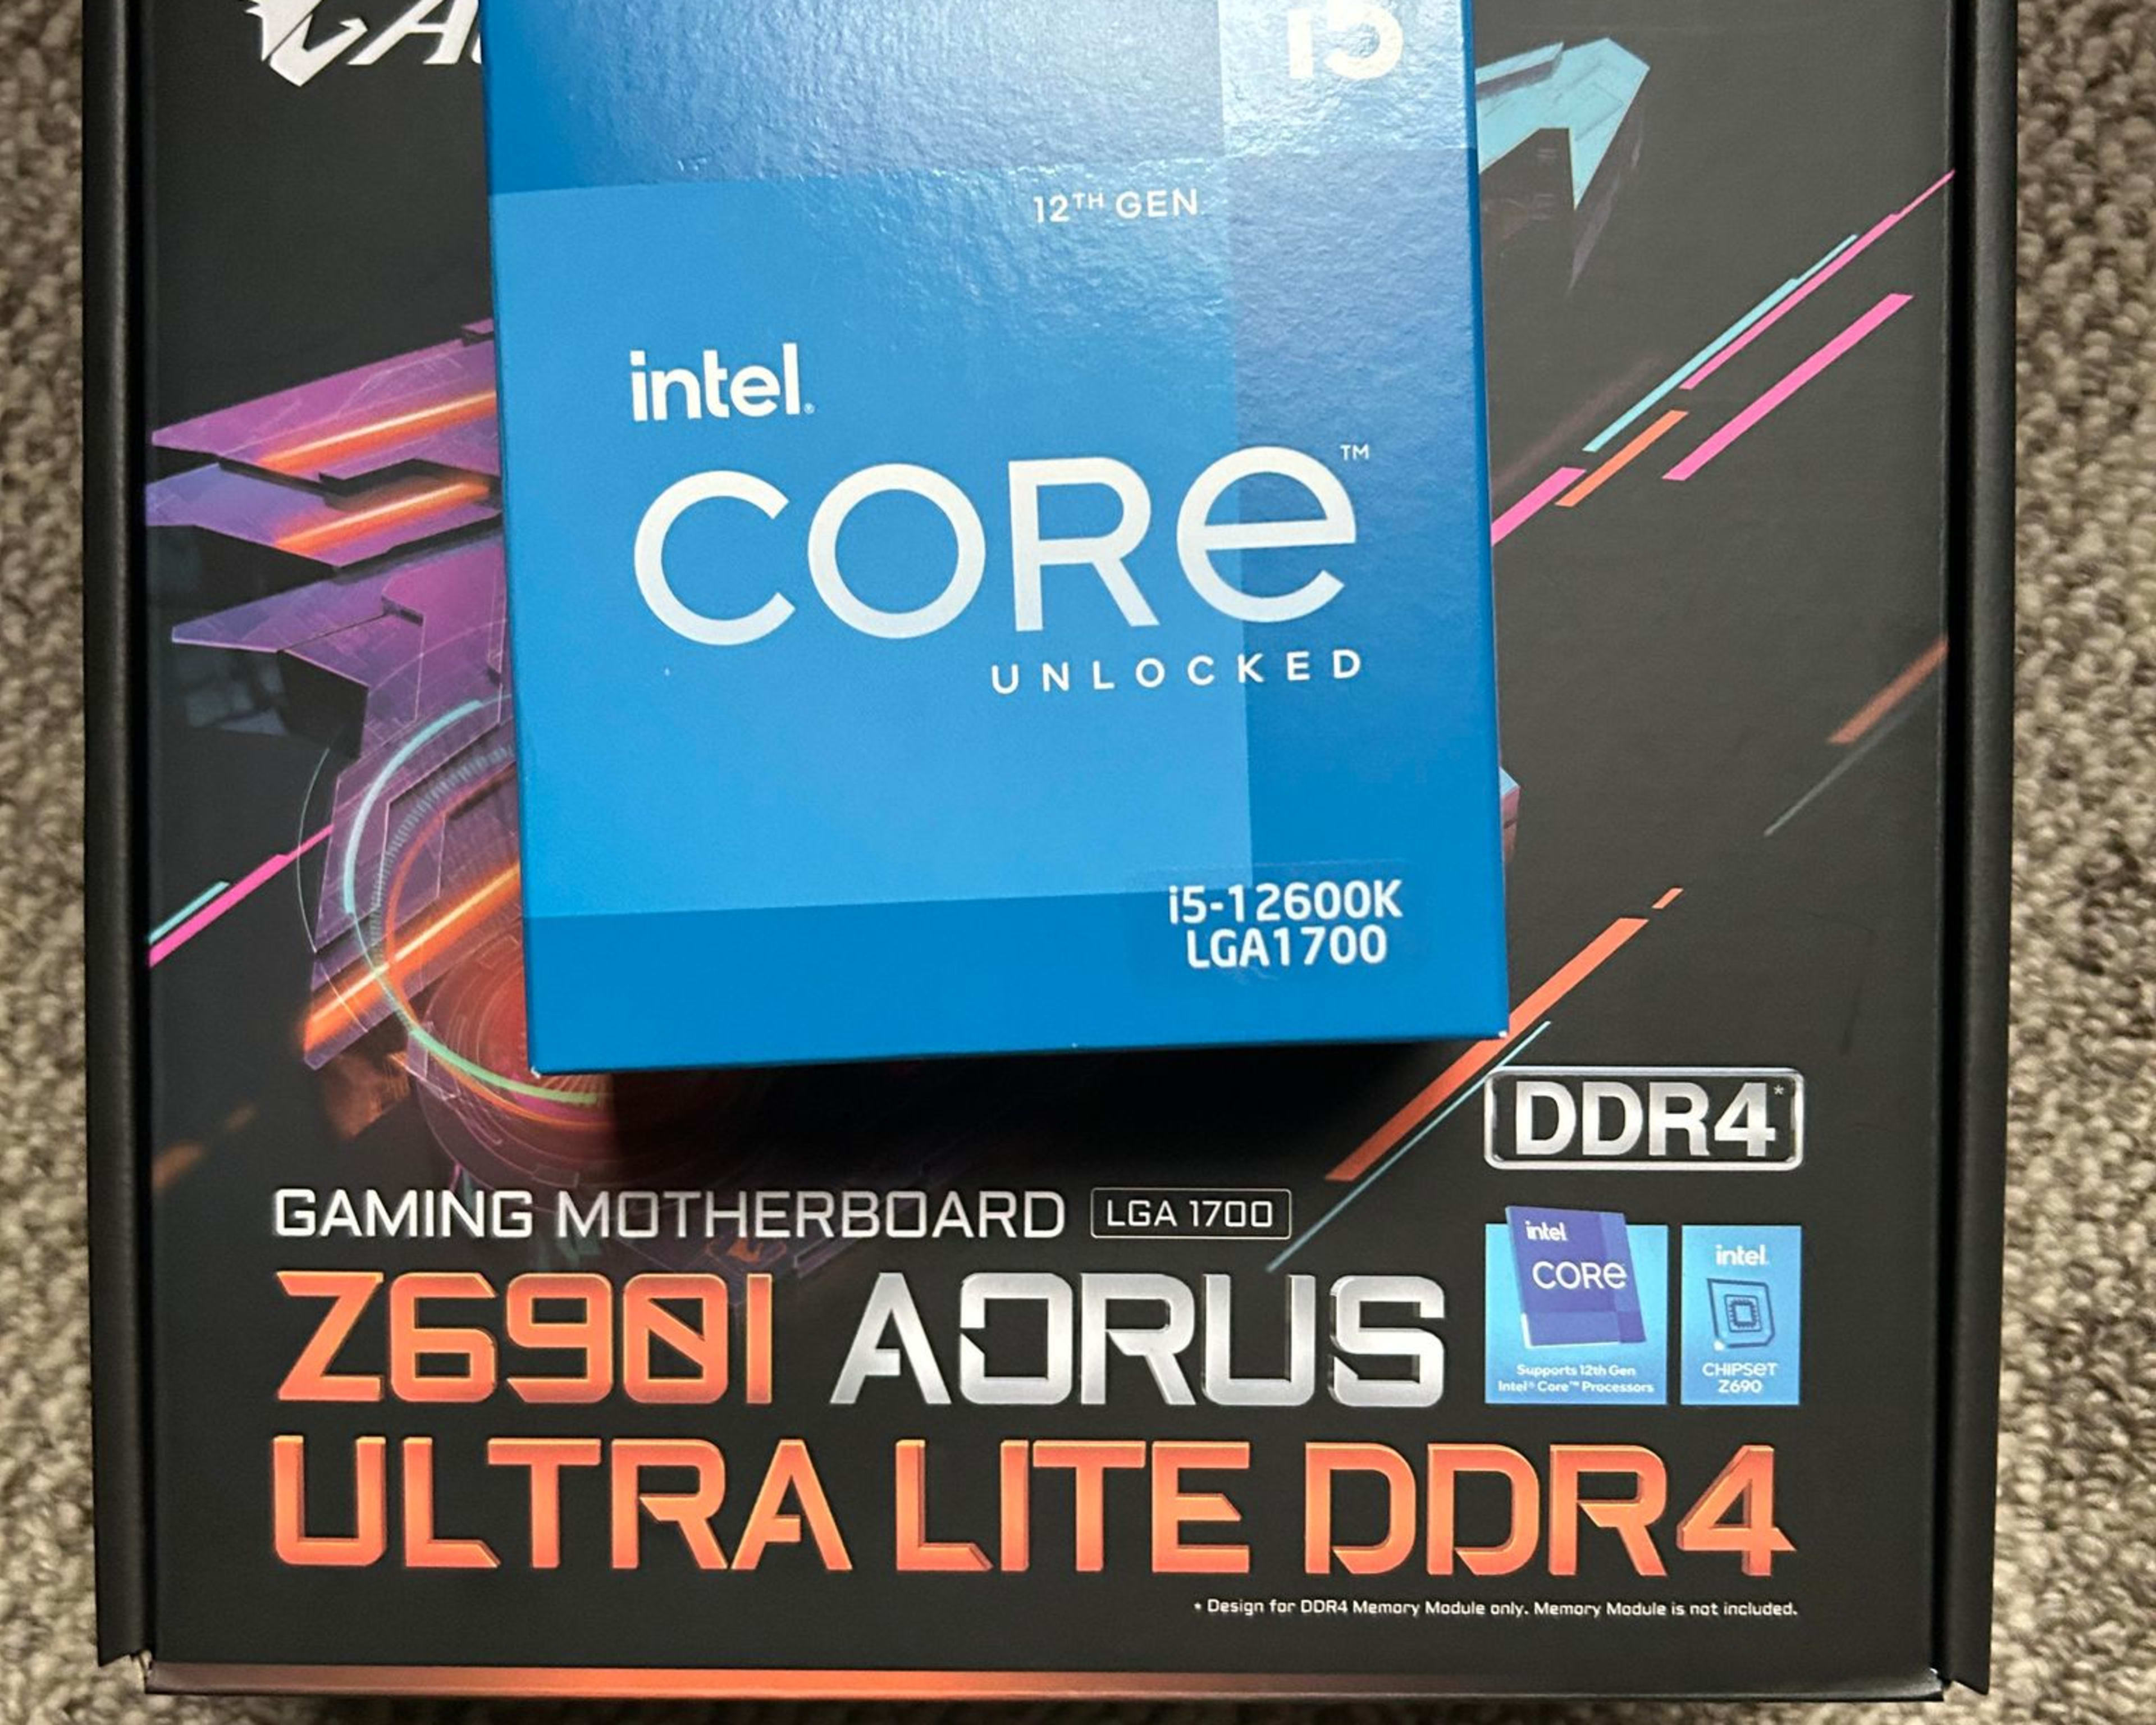 I5-12600K + Z690I Aorus Ultra Lite DDR4